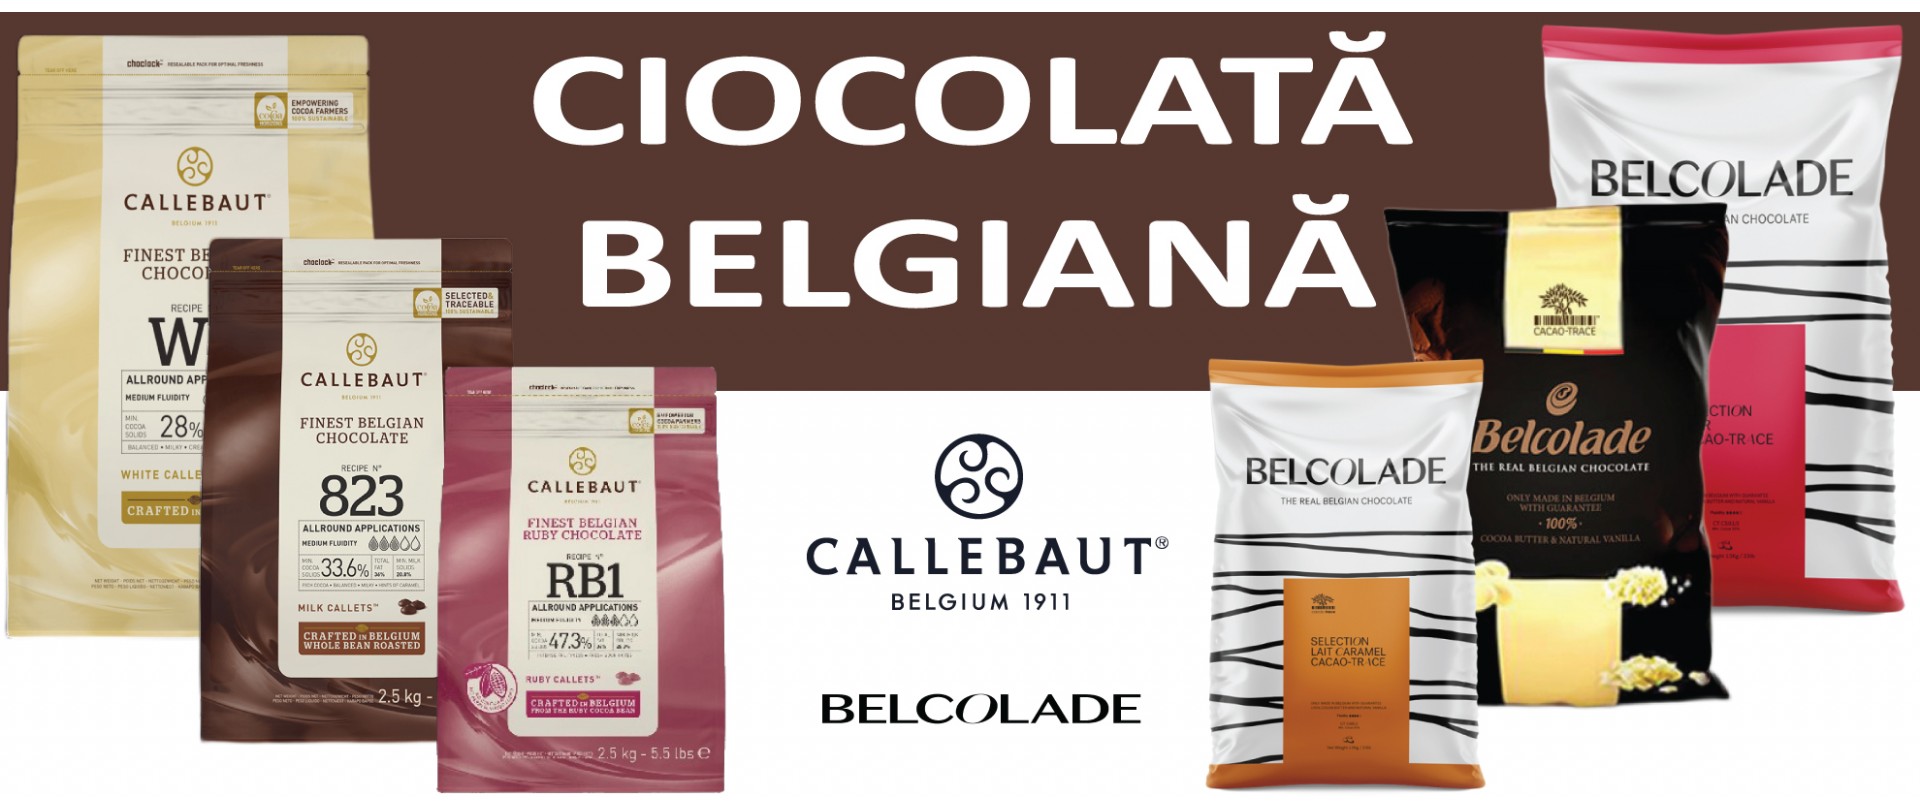 Ciocolata Belgiana